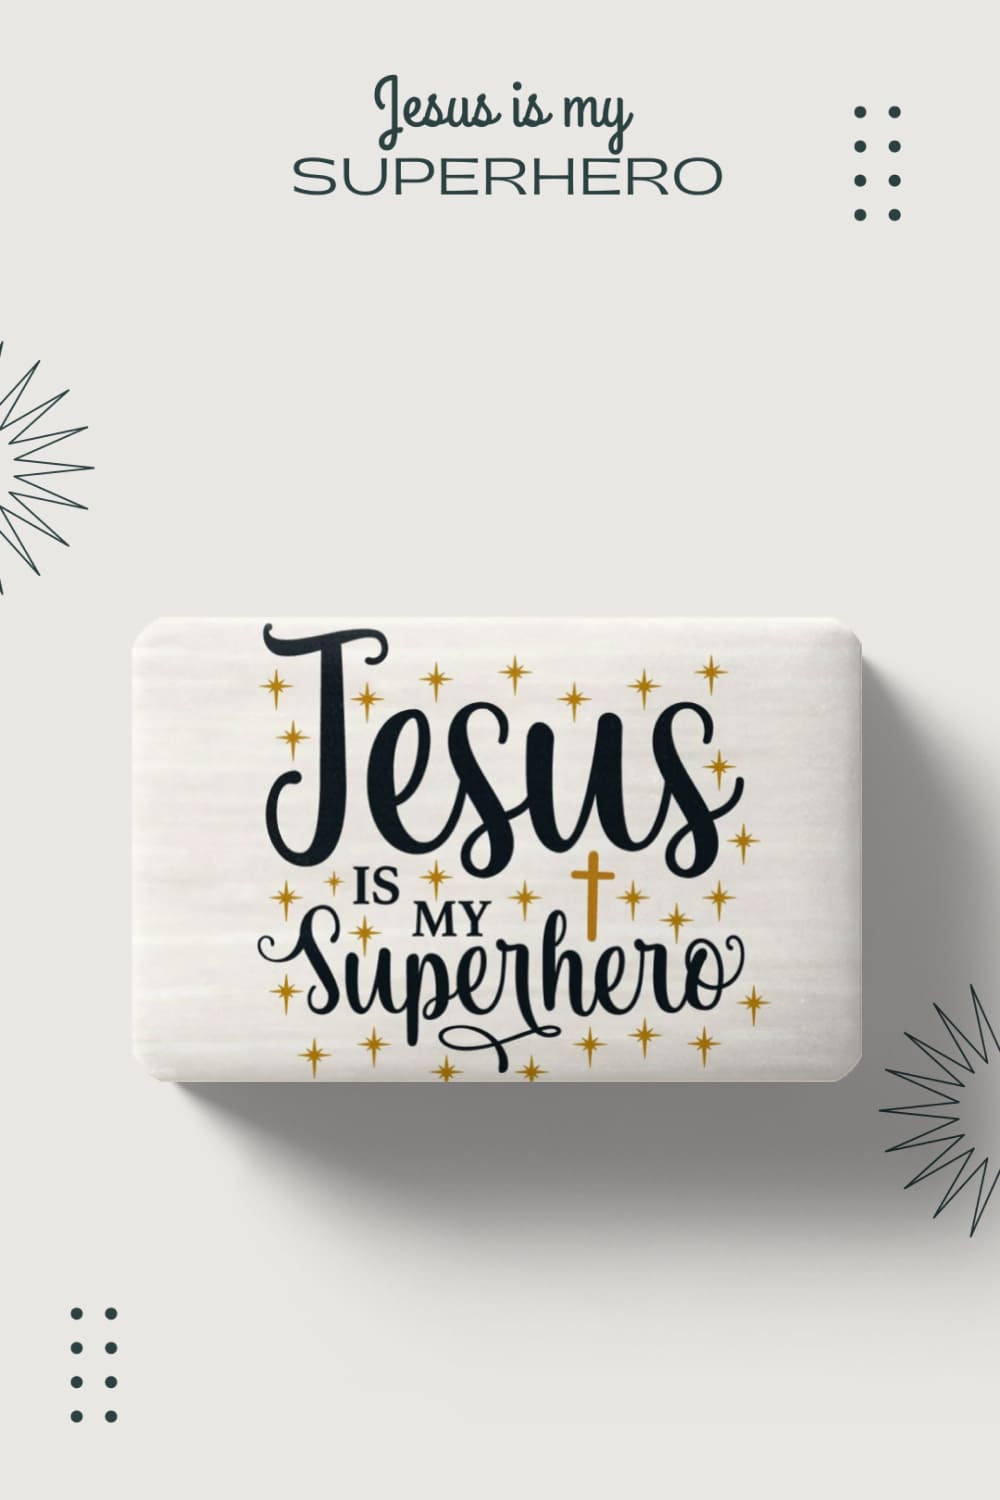 Jesus is my superhero, picture for pinterest.